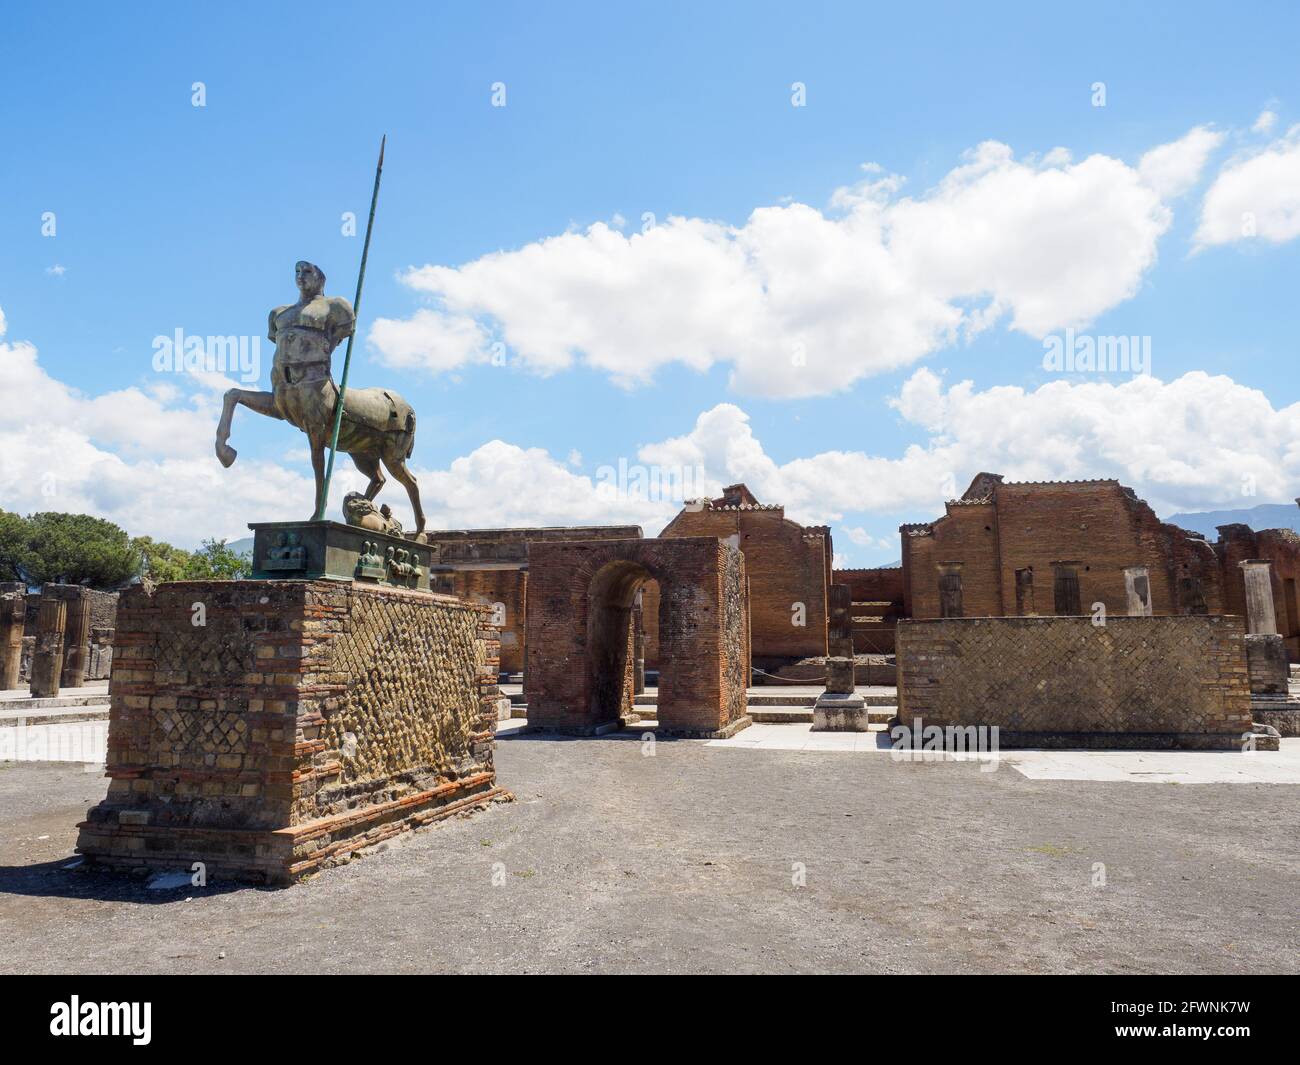 Centaur statue of the Polish sculptor Igor Mitoraj at Pompei Forum - Pompeii archaeological site, Italy Stock Photo